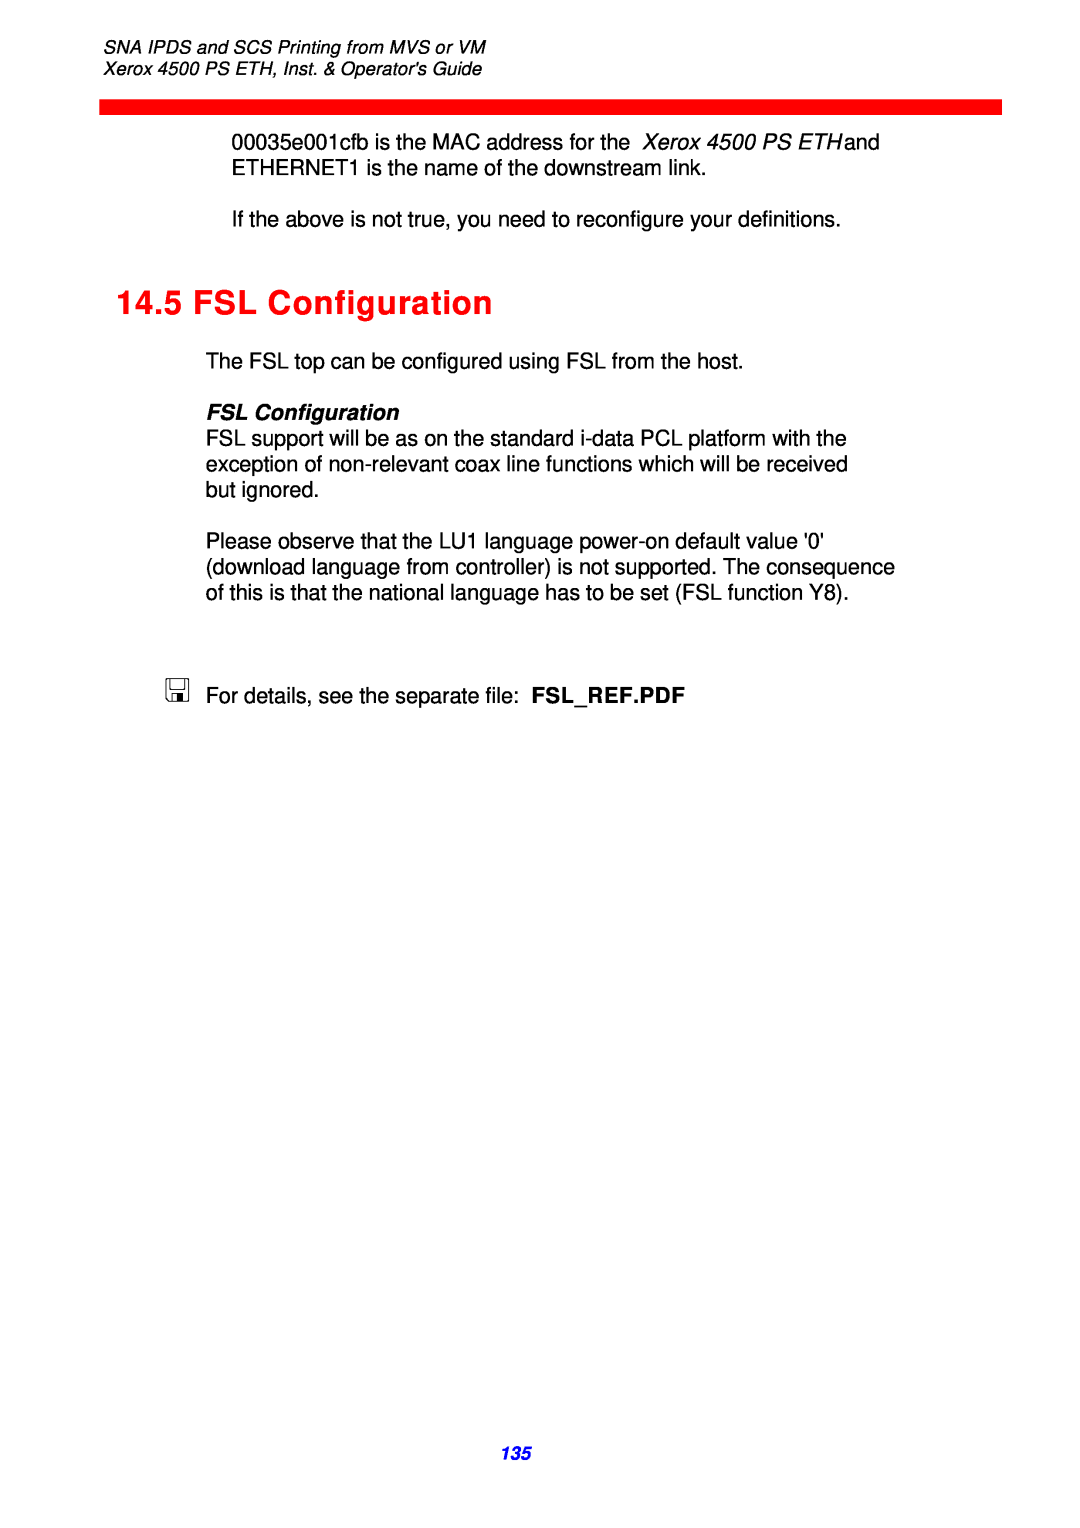 Xerox 4500 ps eth instruction manual FSL Configuration 